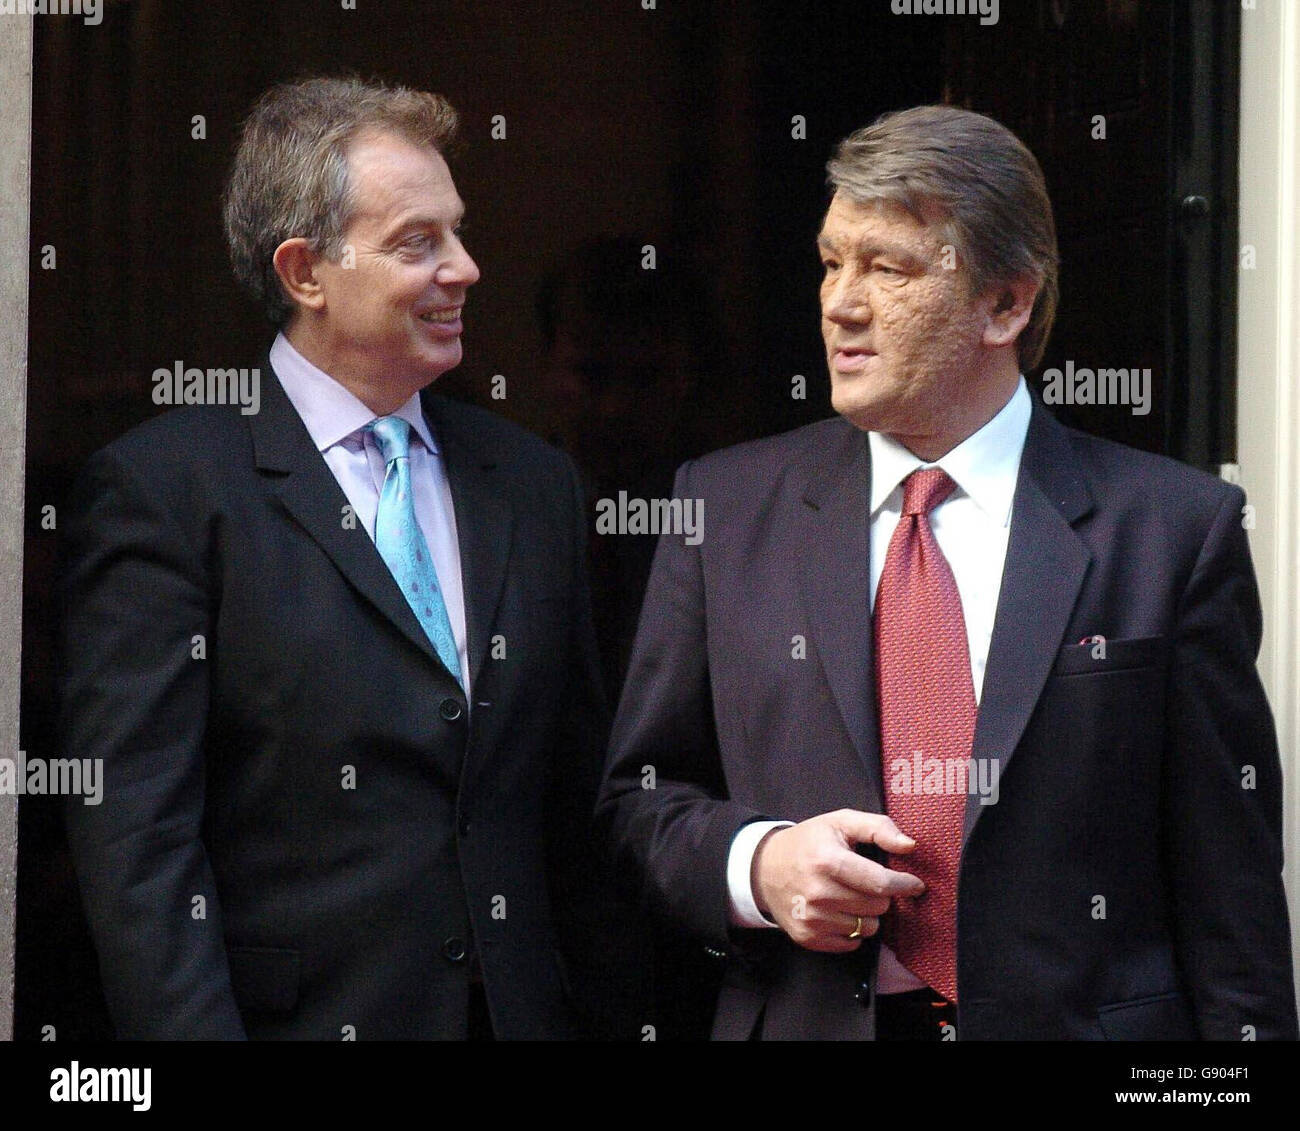 Britain's Prime Minister Tony Blair (R) with Ukraine's President Viktor Yushchenko outside 10 Downing Street in central London. Stock Photo